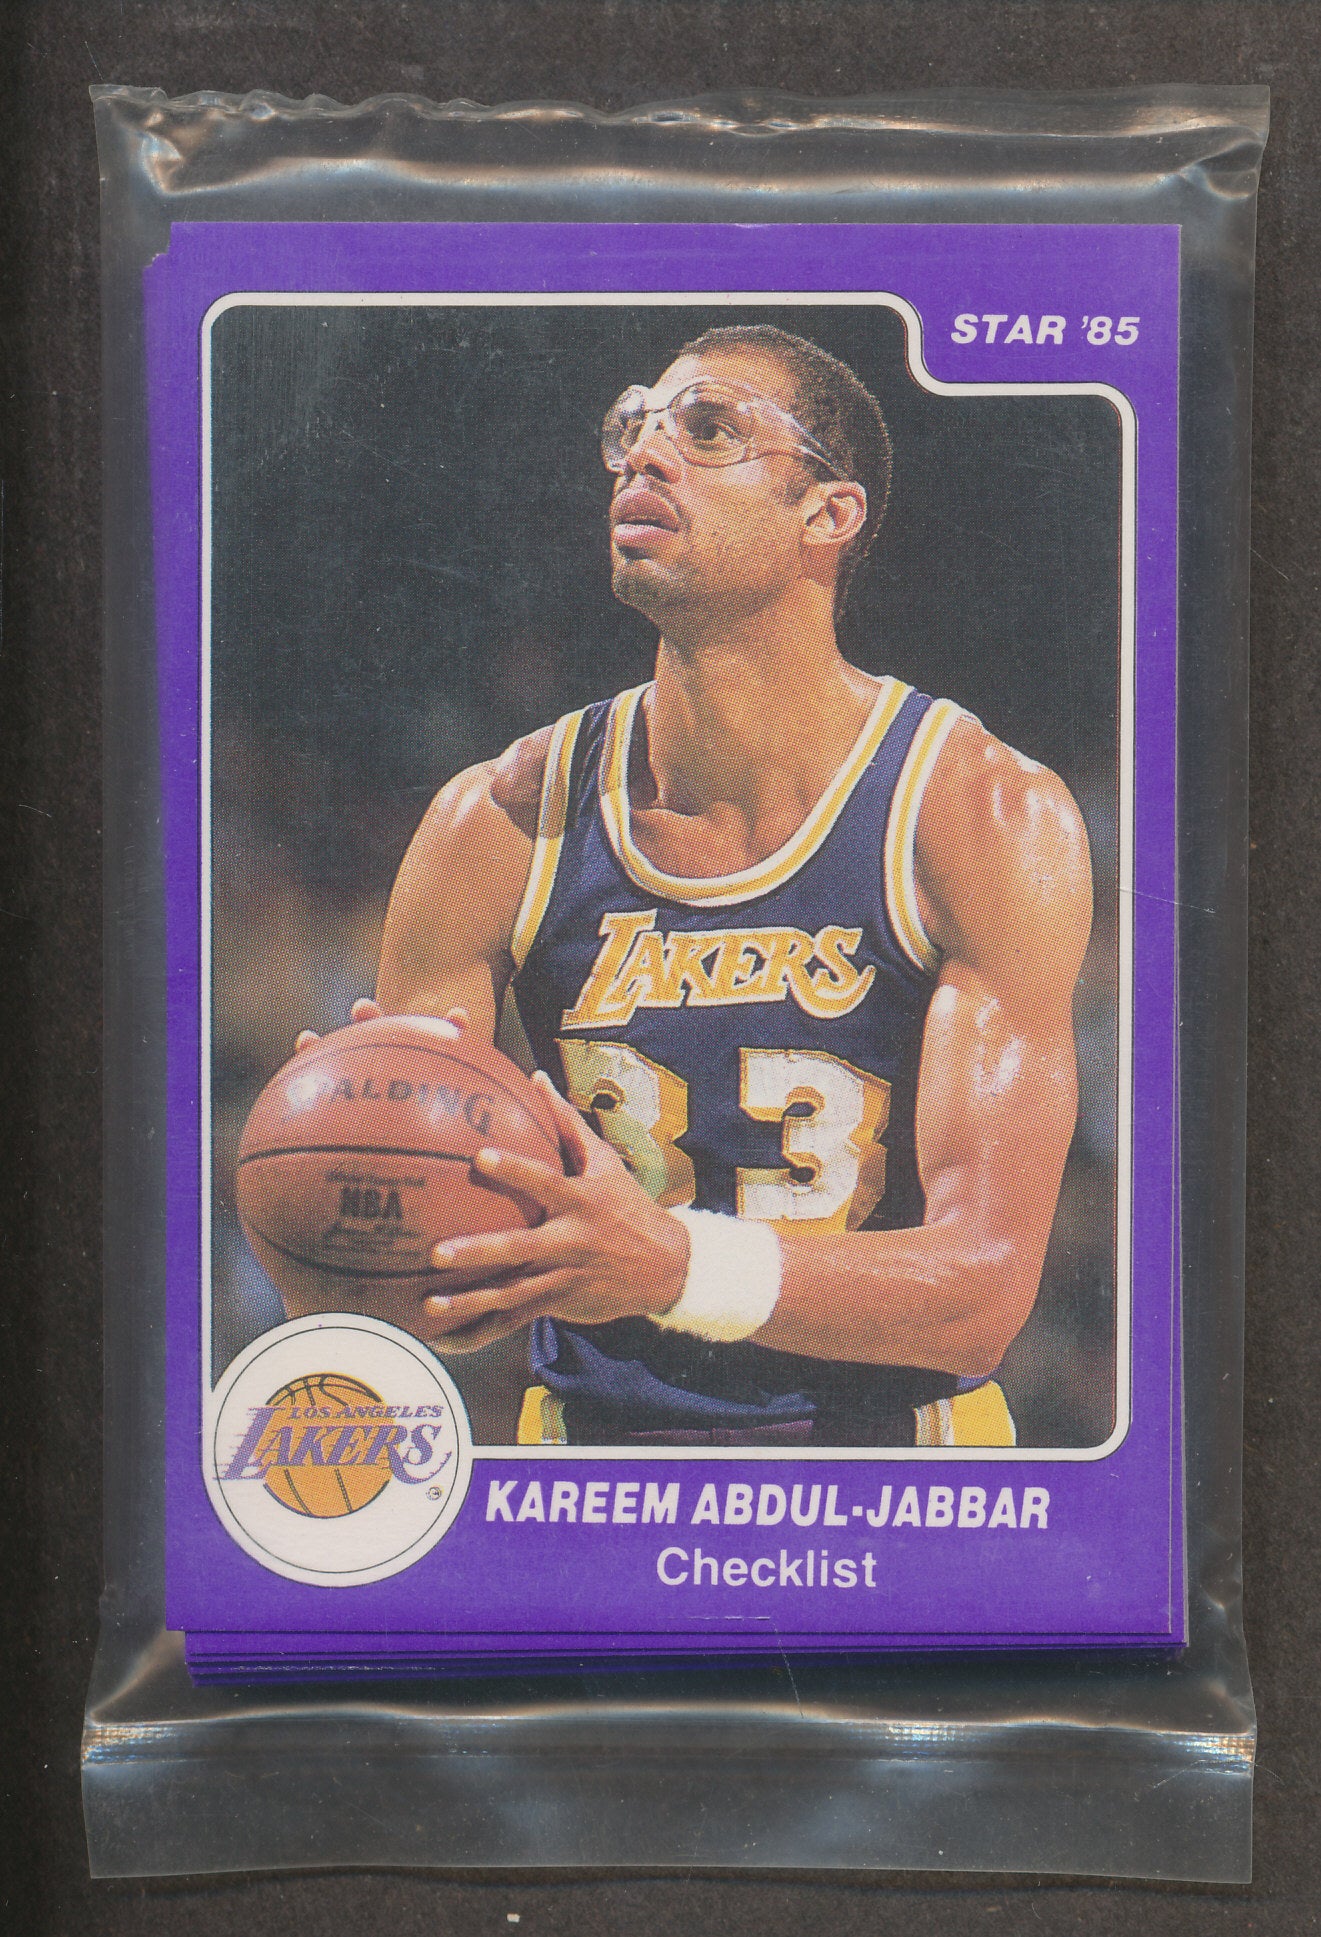 1985 Star Basketball Abdul-Jabbar Complete Set (Sealed)